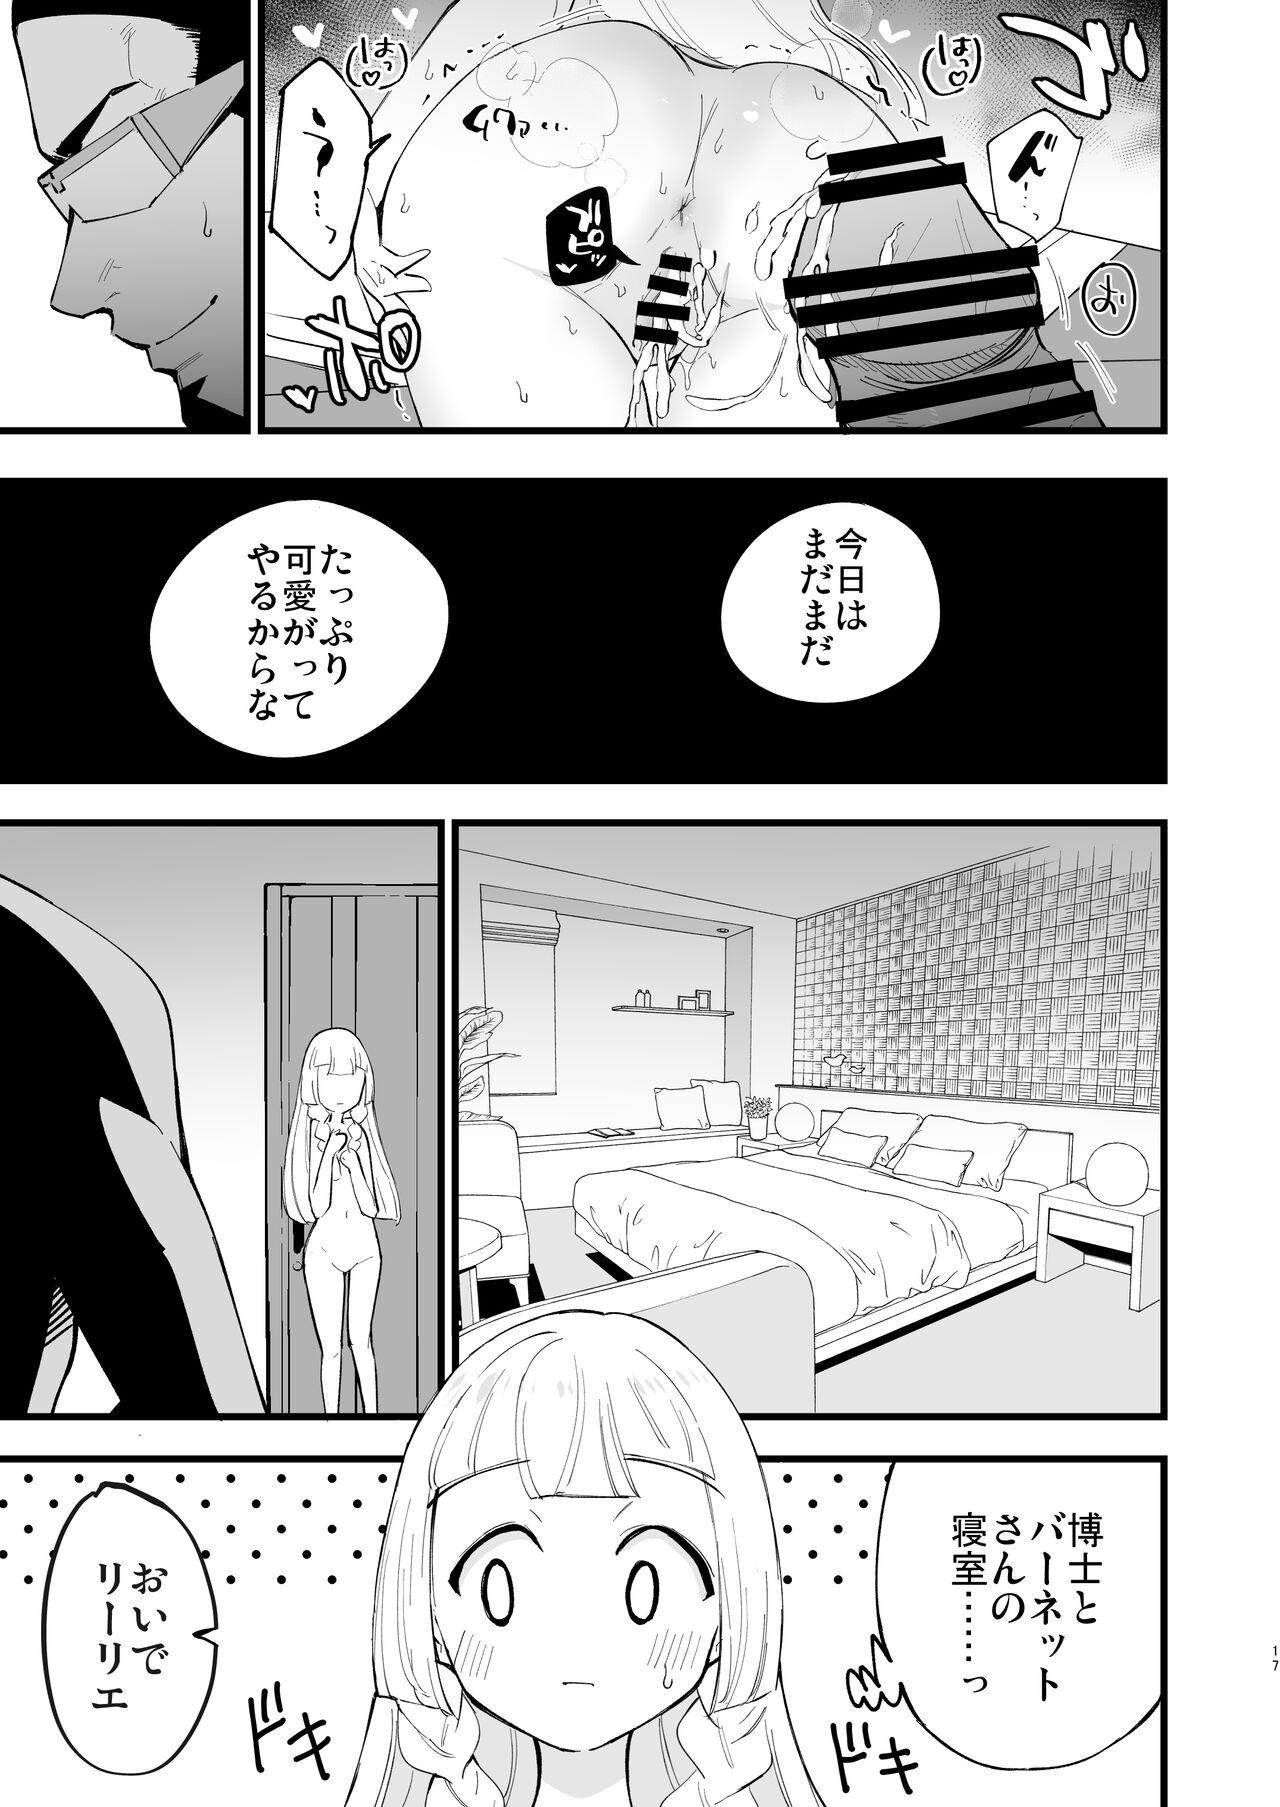 Hakase no Yoru no Joshu. 4 - Doctor's Night Assistant Story 4 16